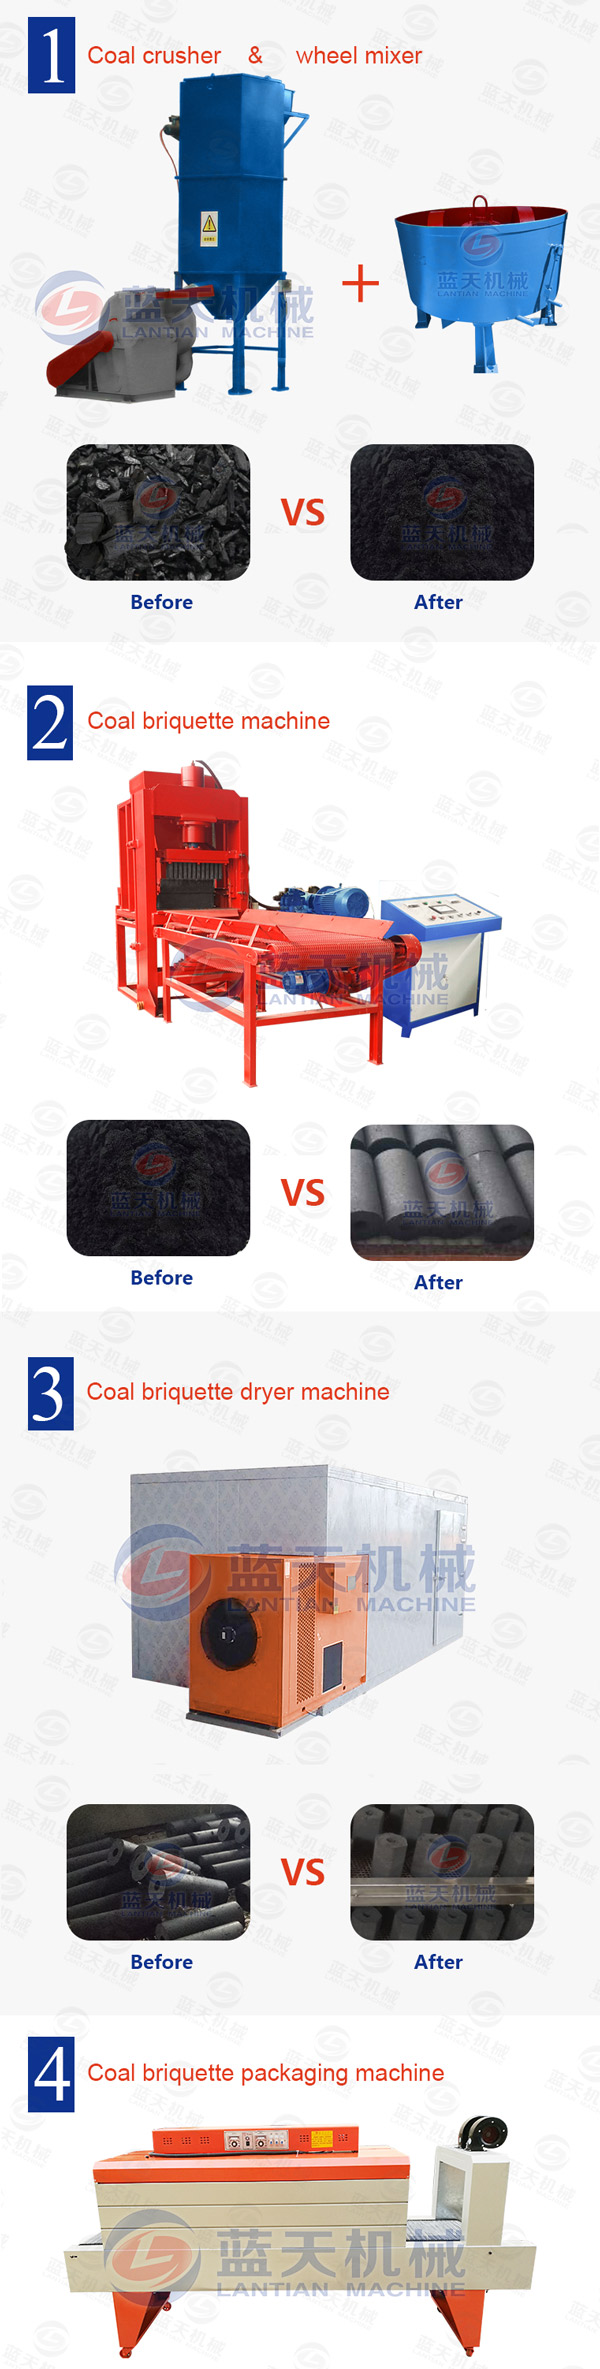 coal briquette equipment